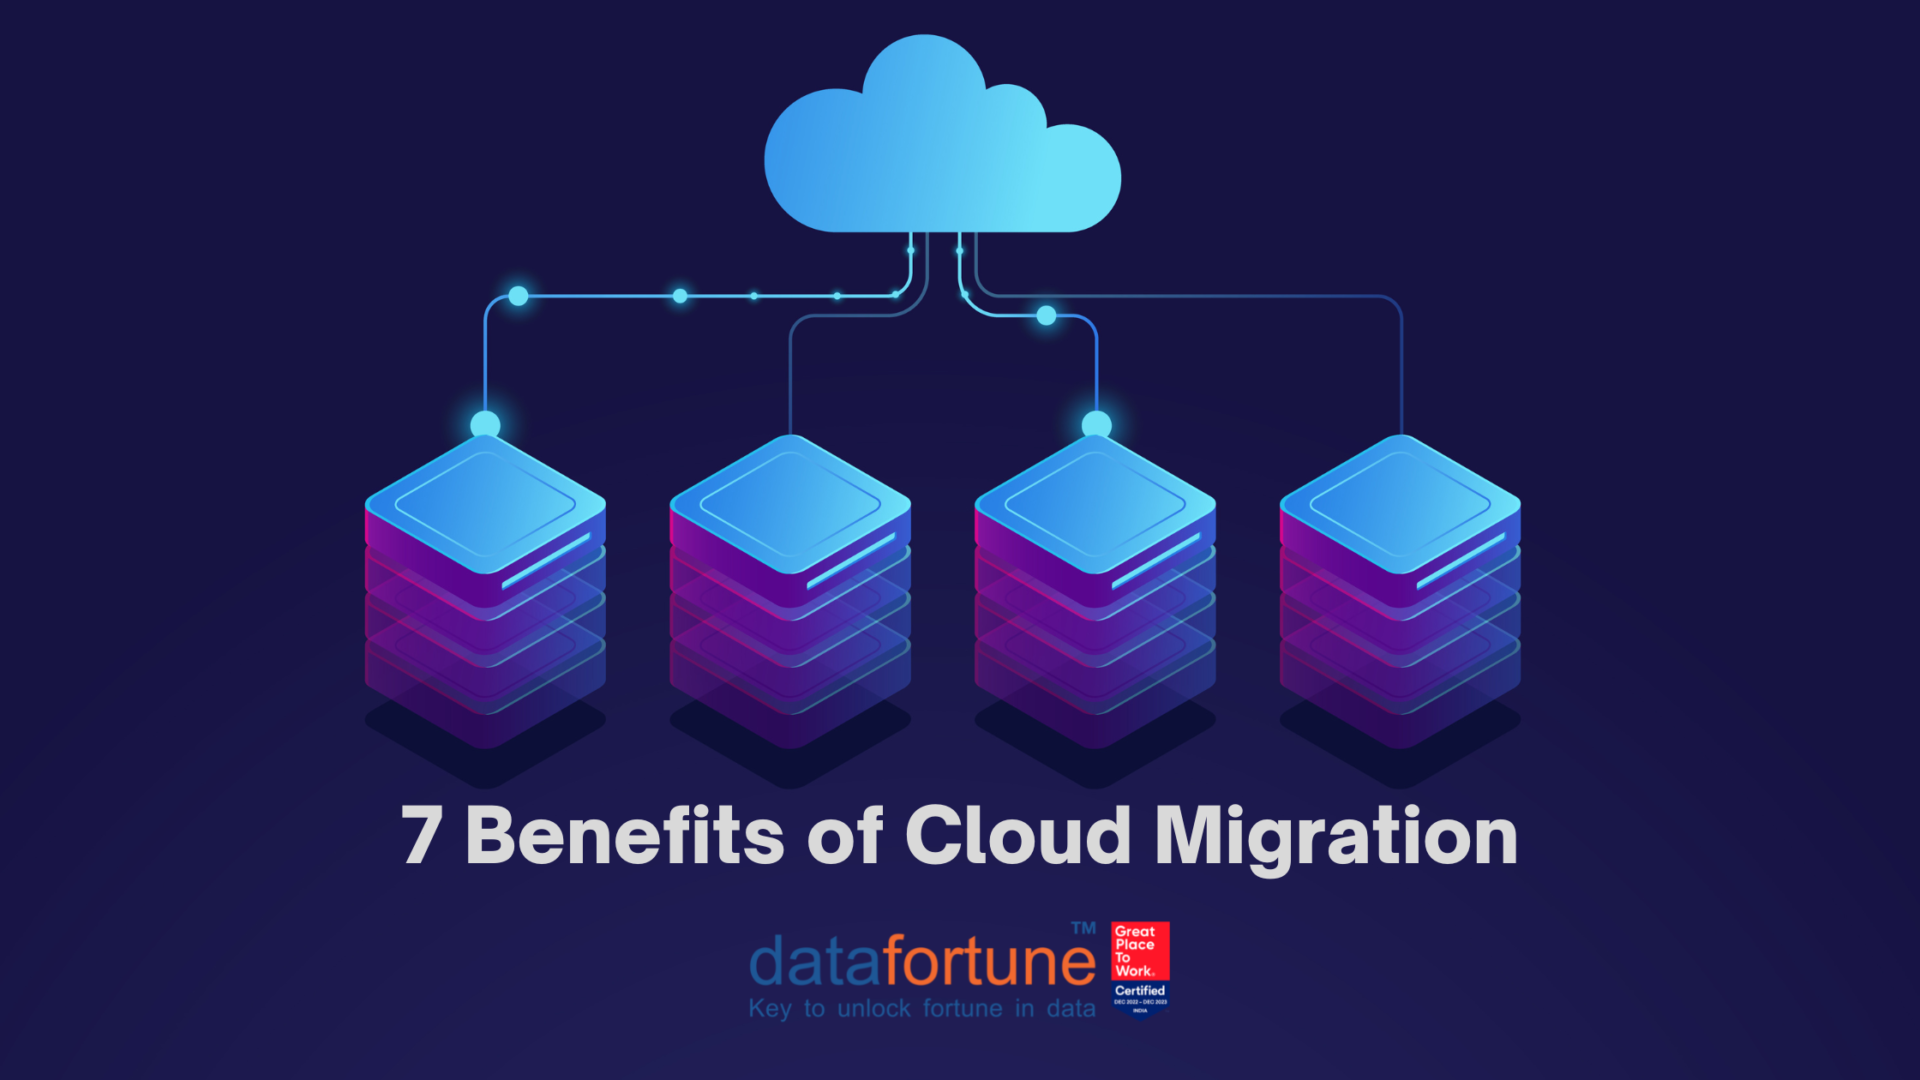 7 Key Benefits of Cloud Migration